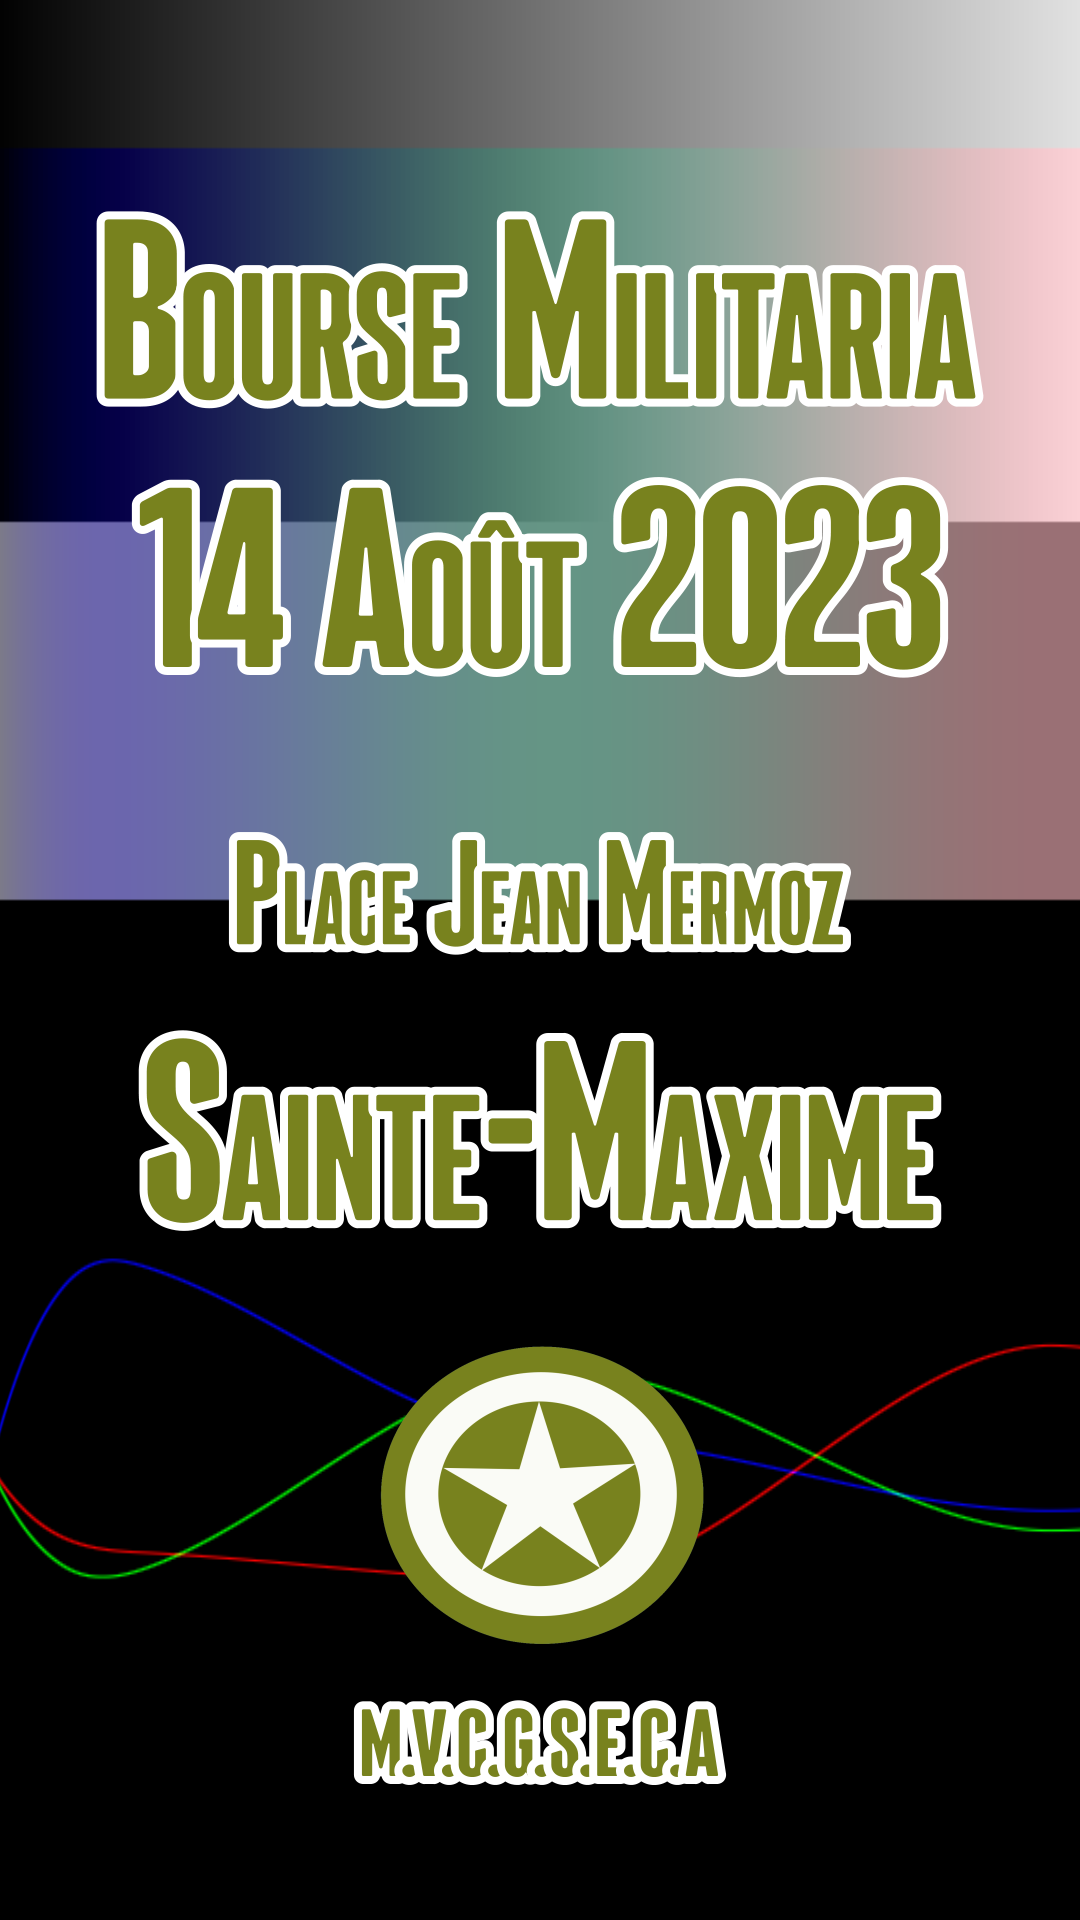 2023-bourse-militaria.png